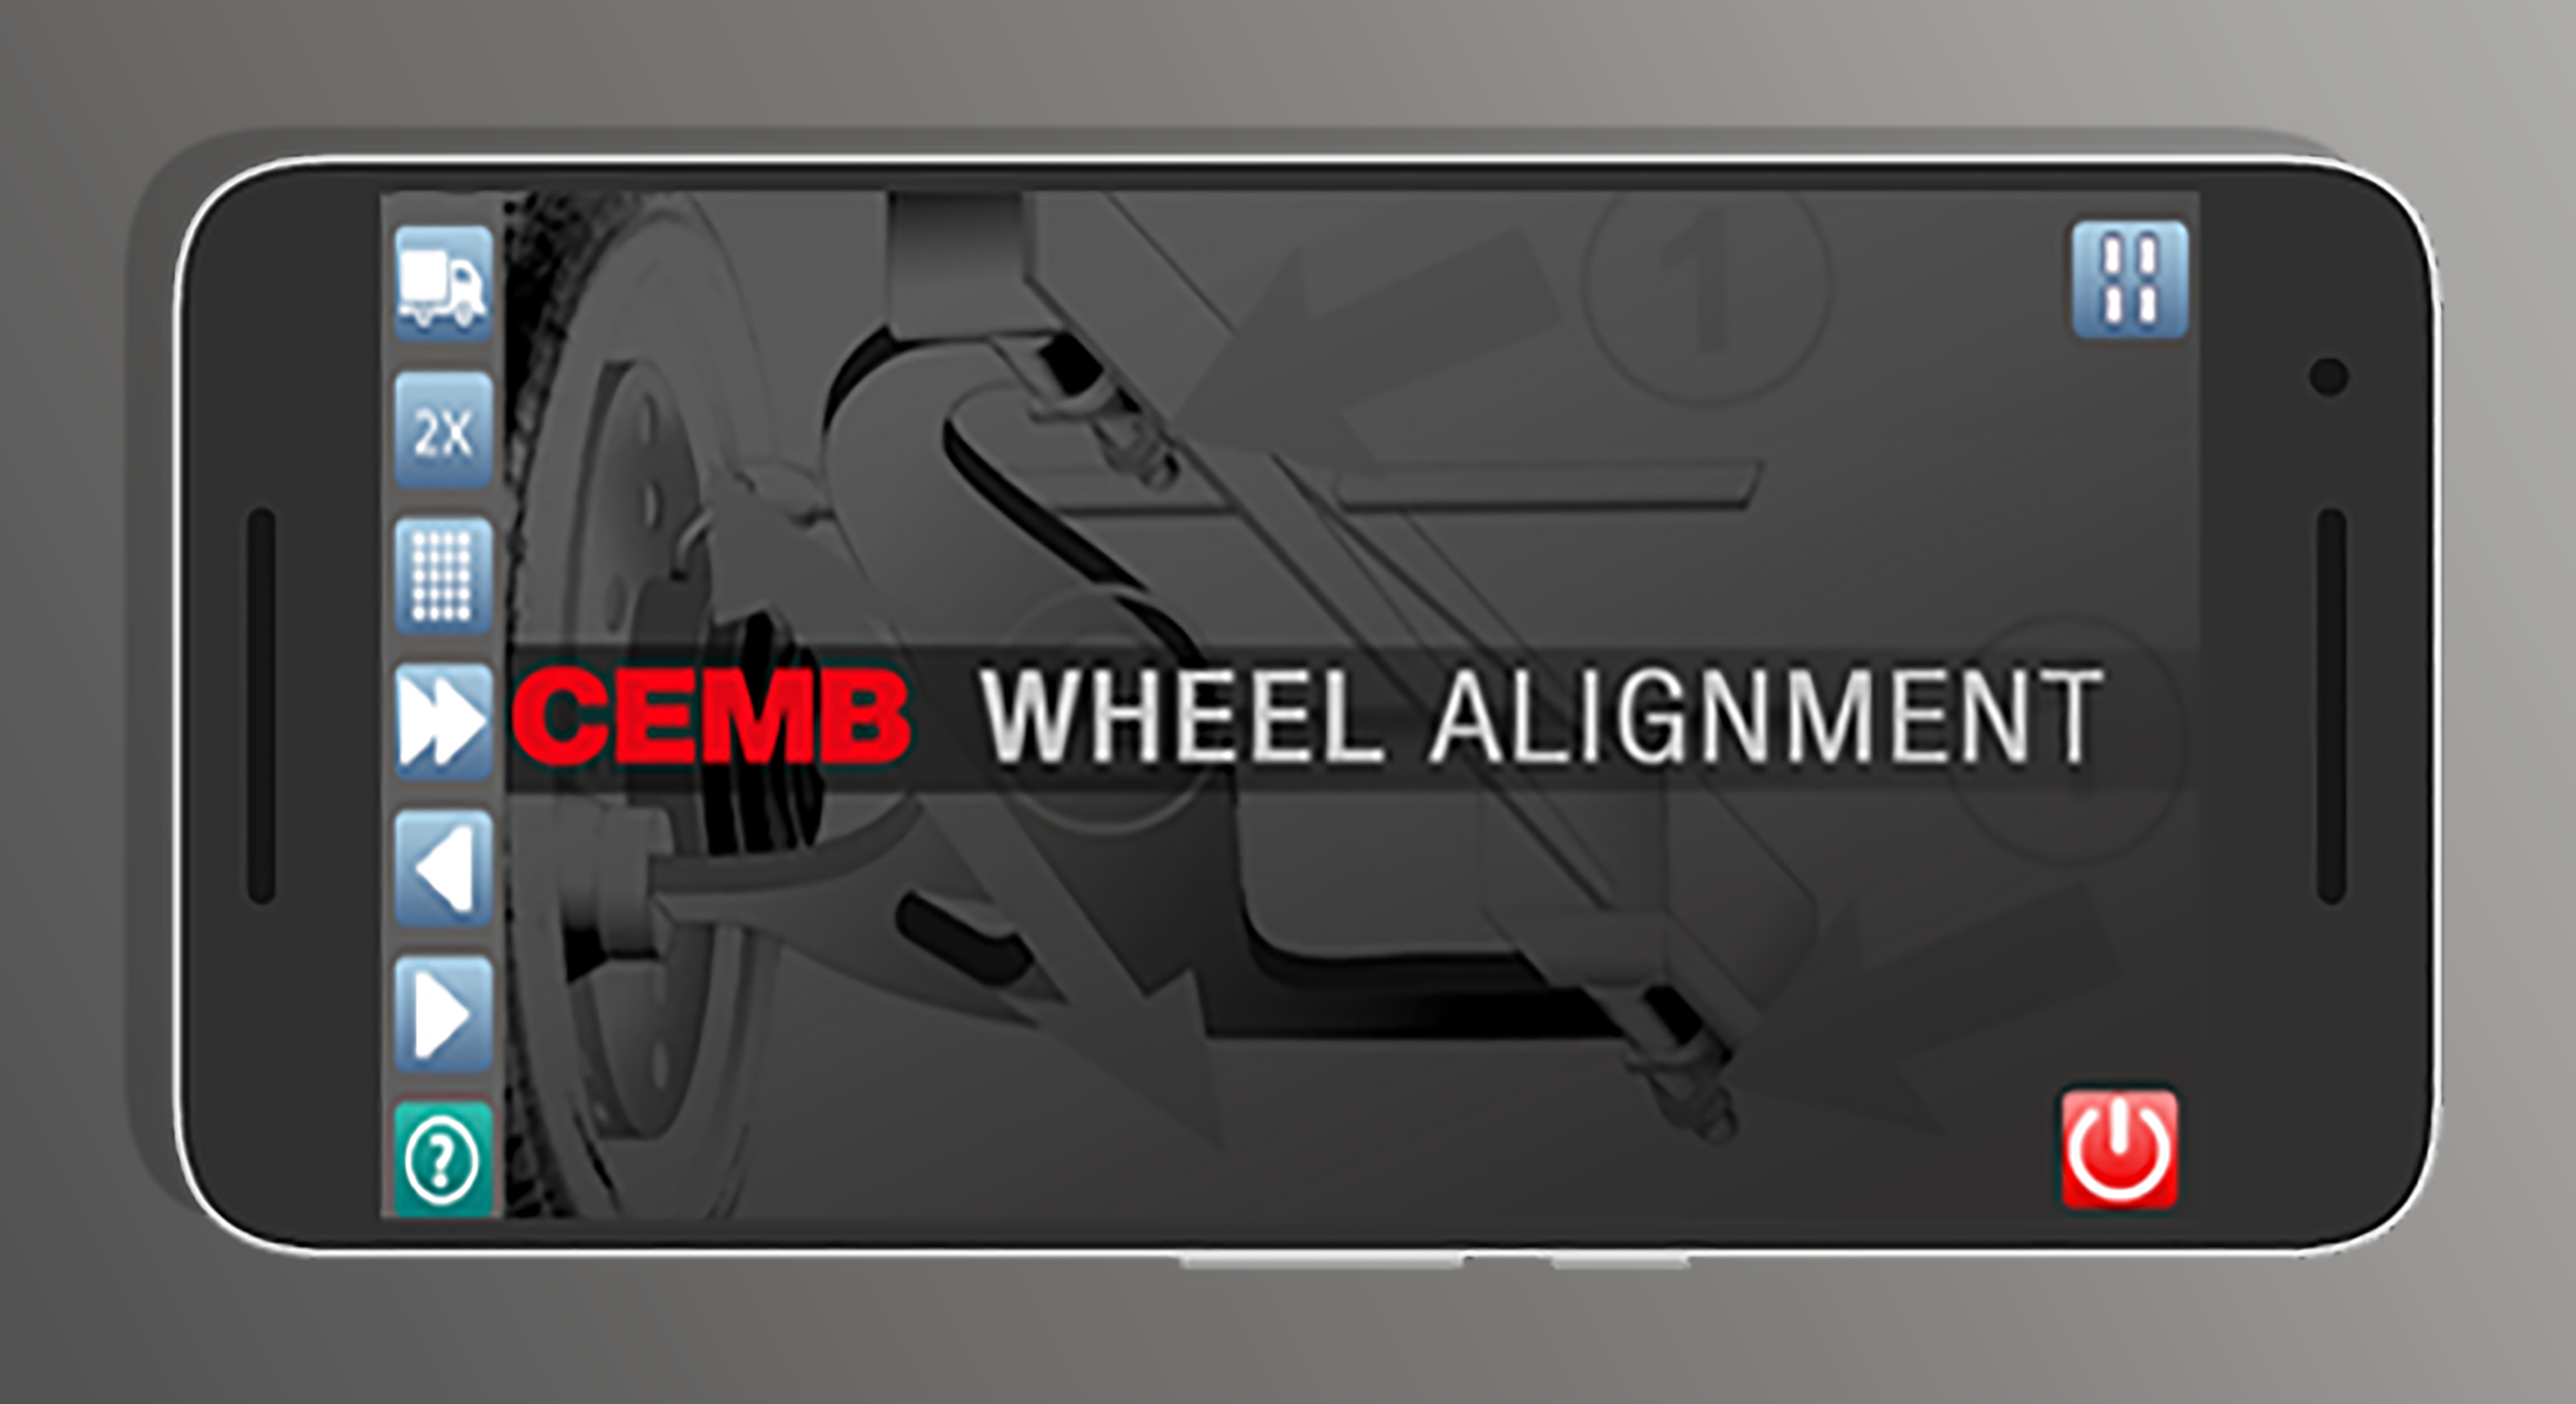 Cemb launches wheel alignment remote control app